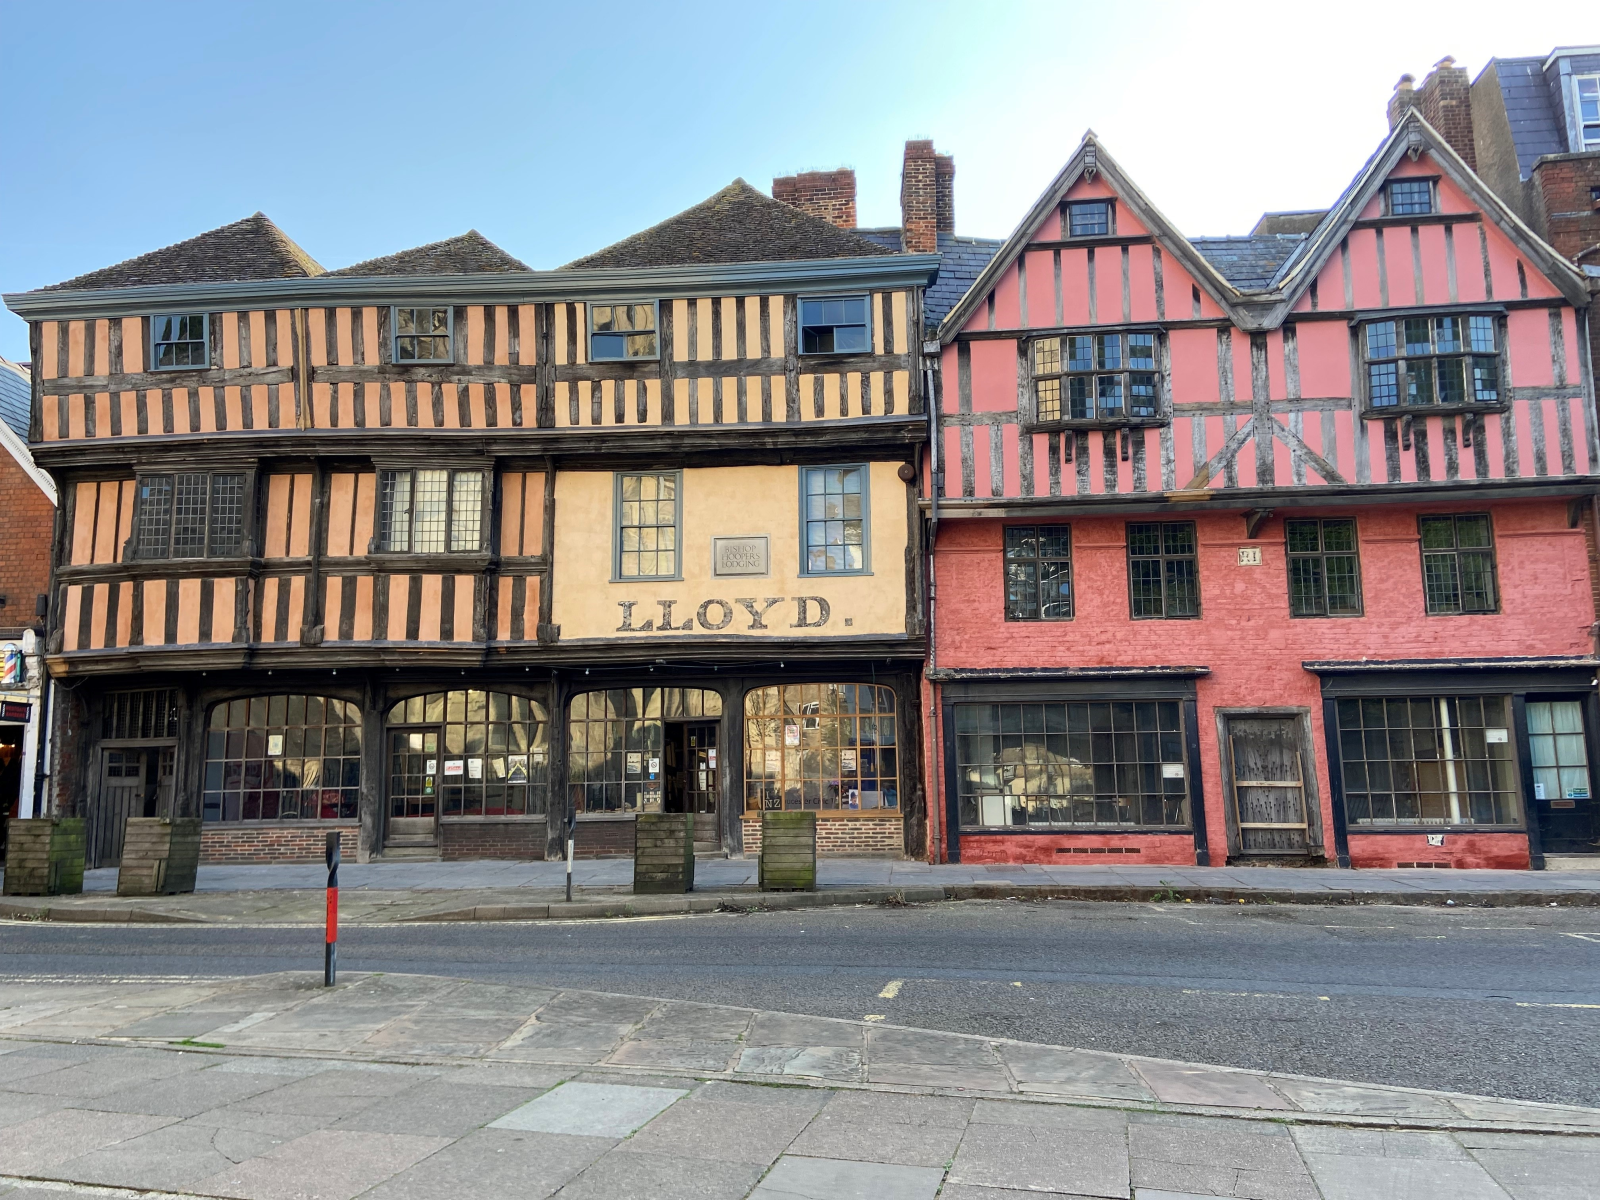 Exterior of The Folk of Gloucester